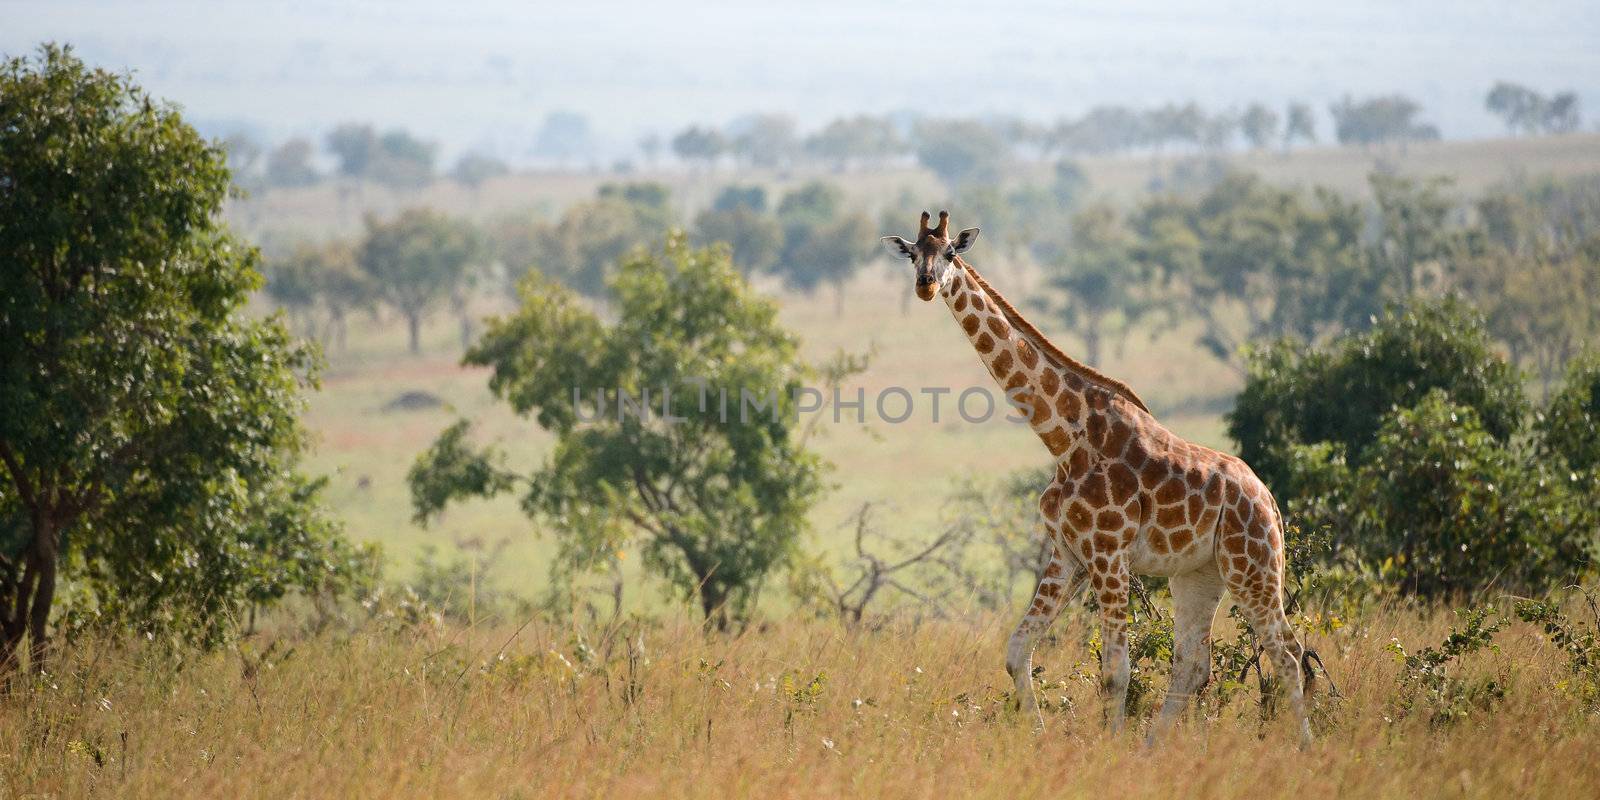 Giraffa camelopardalis by SURZ